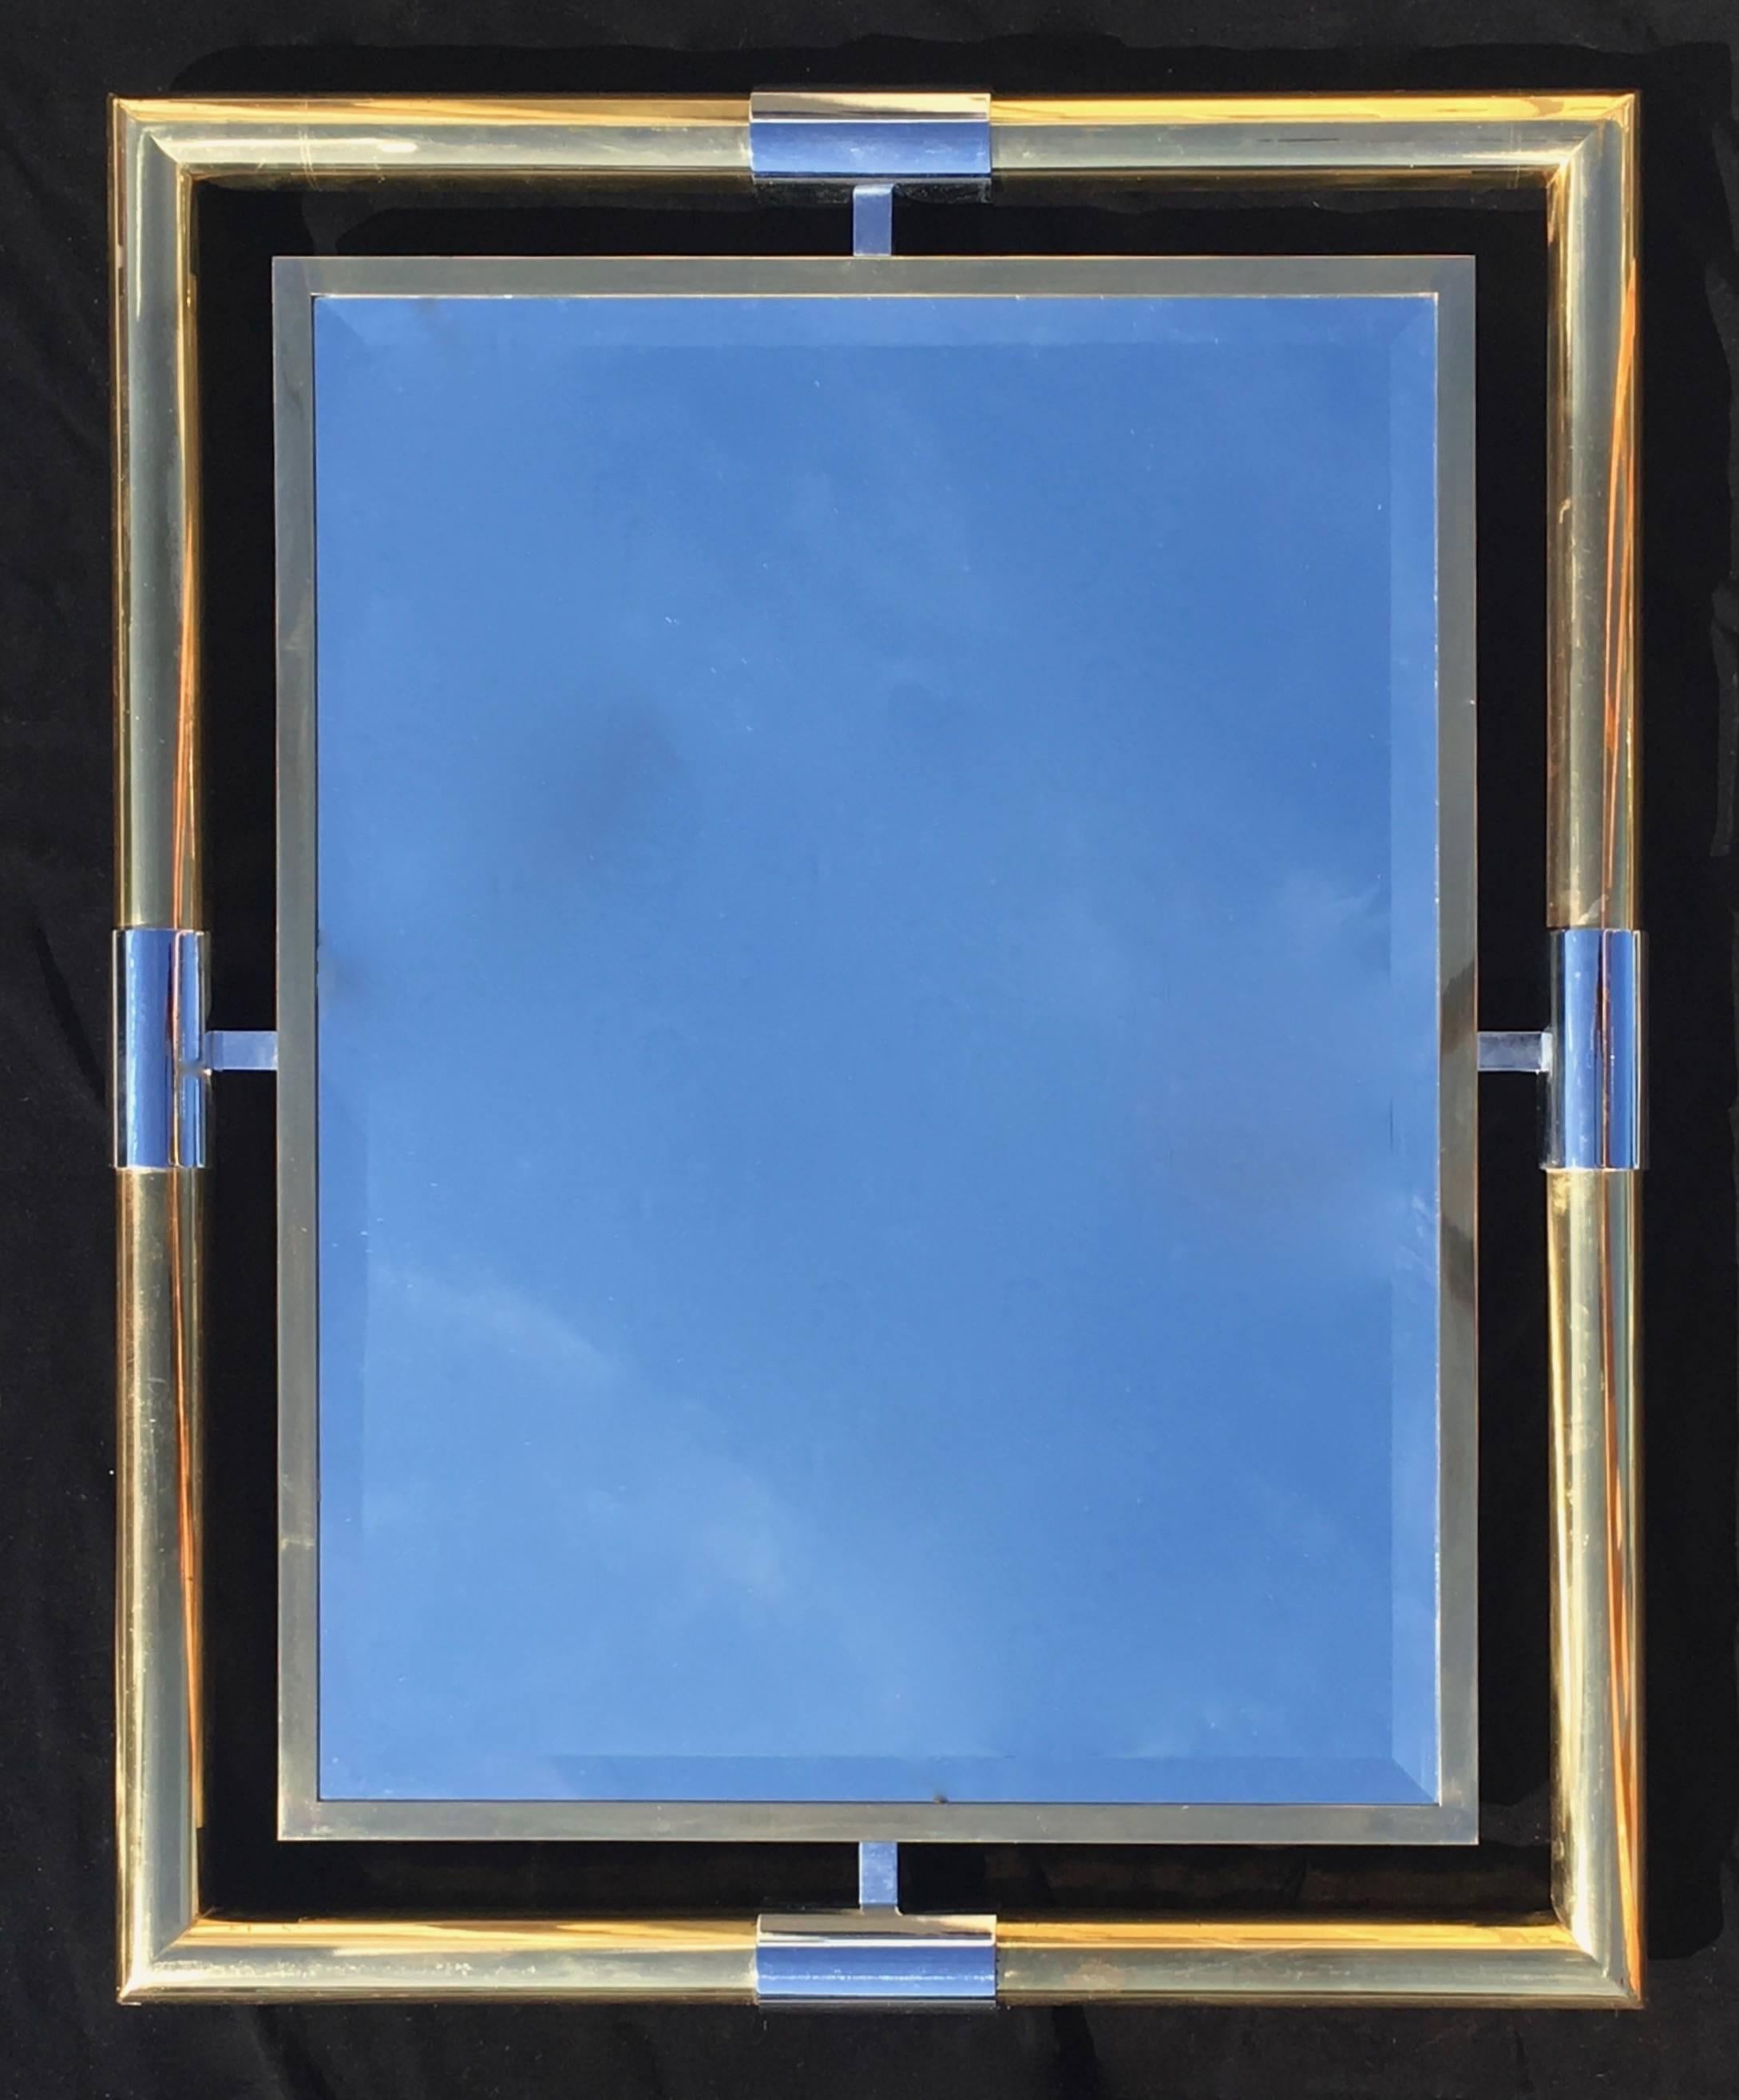 Mirror,
France,
1970s.
Tubular brass frame, steel supports, interior brass frame, beveled glass.
Measures: 100 cm x 80 cm x 5 cm.
 